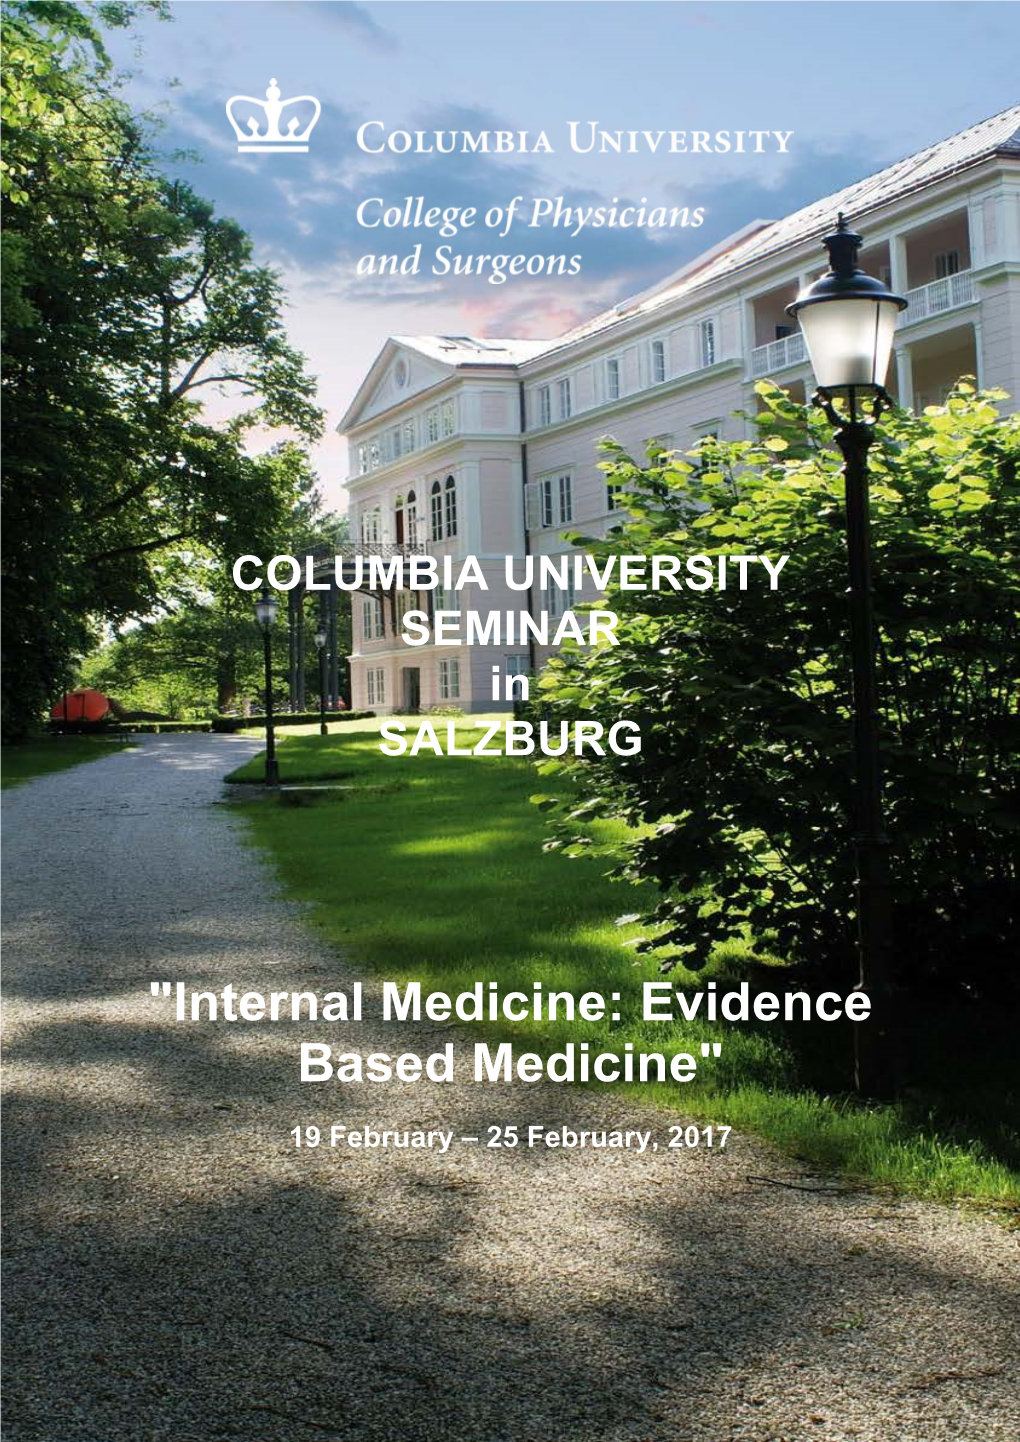 "Internal Medicine: Evidence Based Medicine"